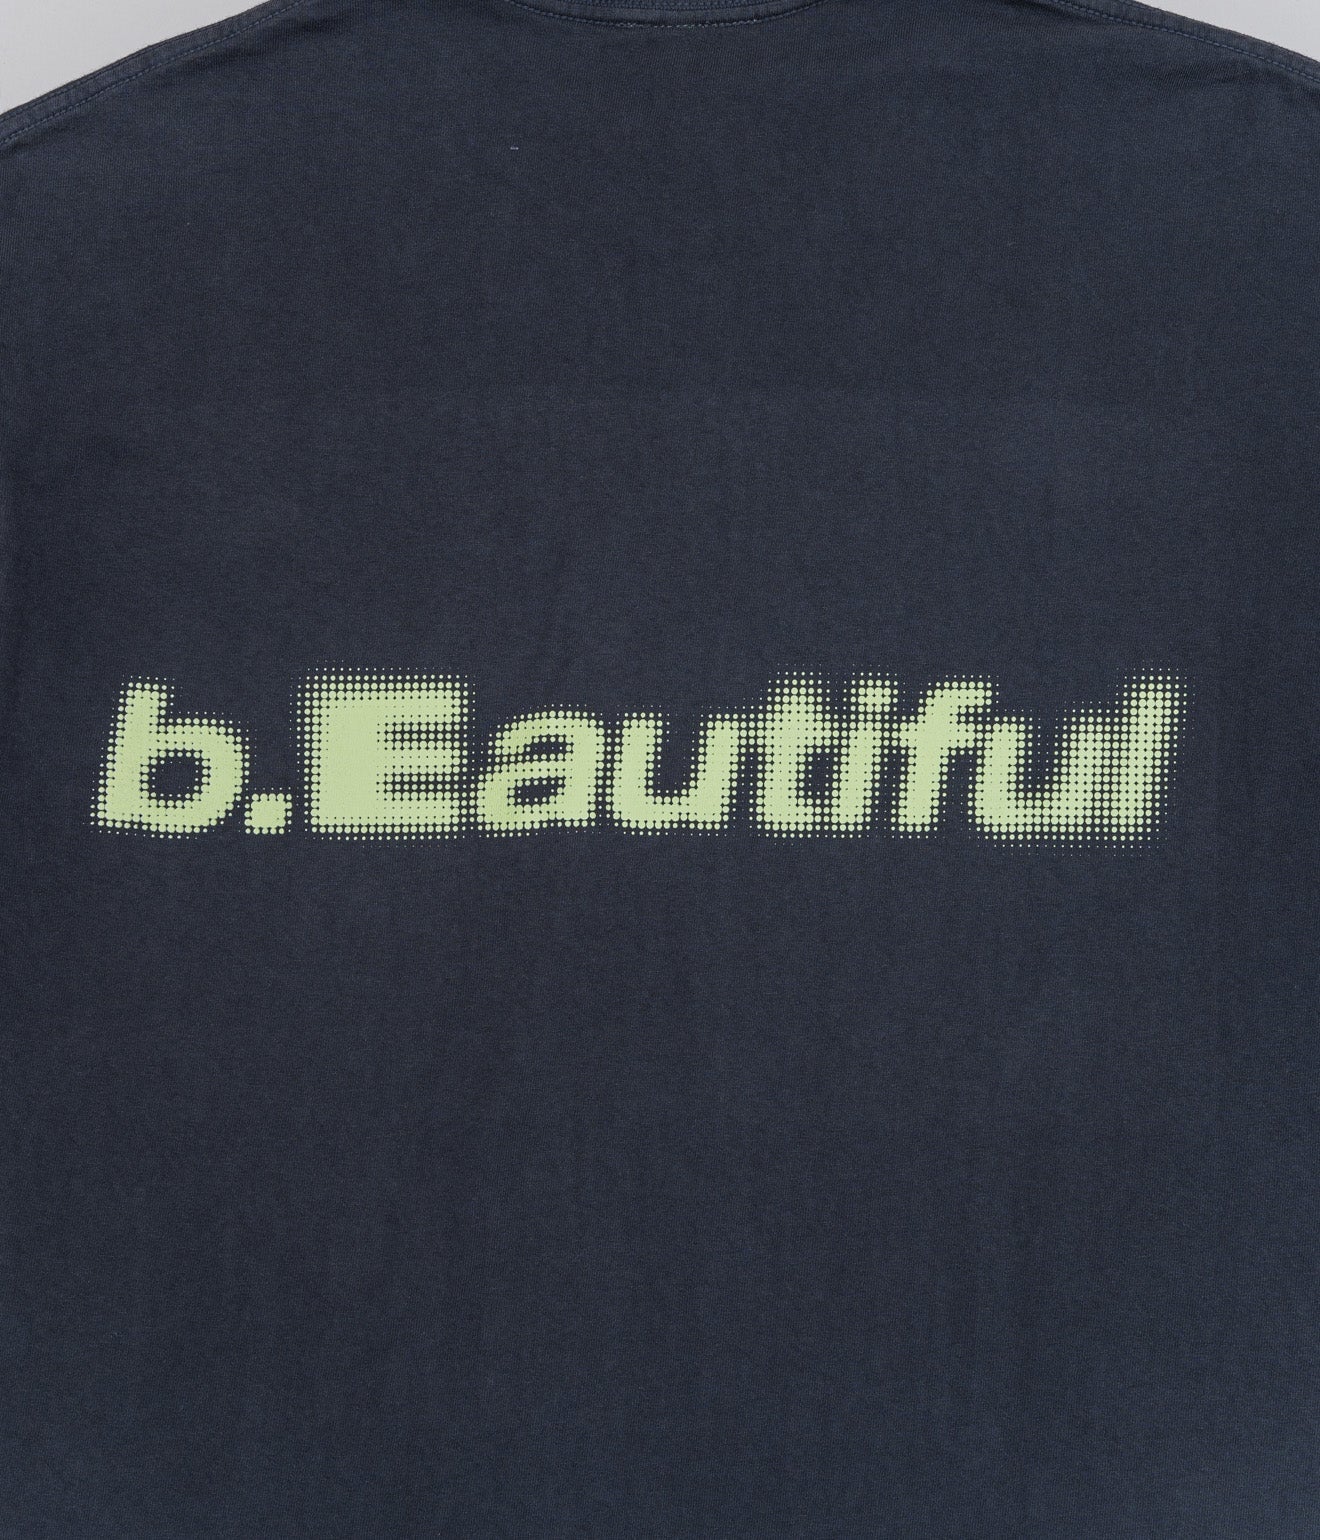 b.Eautiful "b-mode T-Shirt" Dolphin Blue / Lime - WEAREALLANIMALS